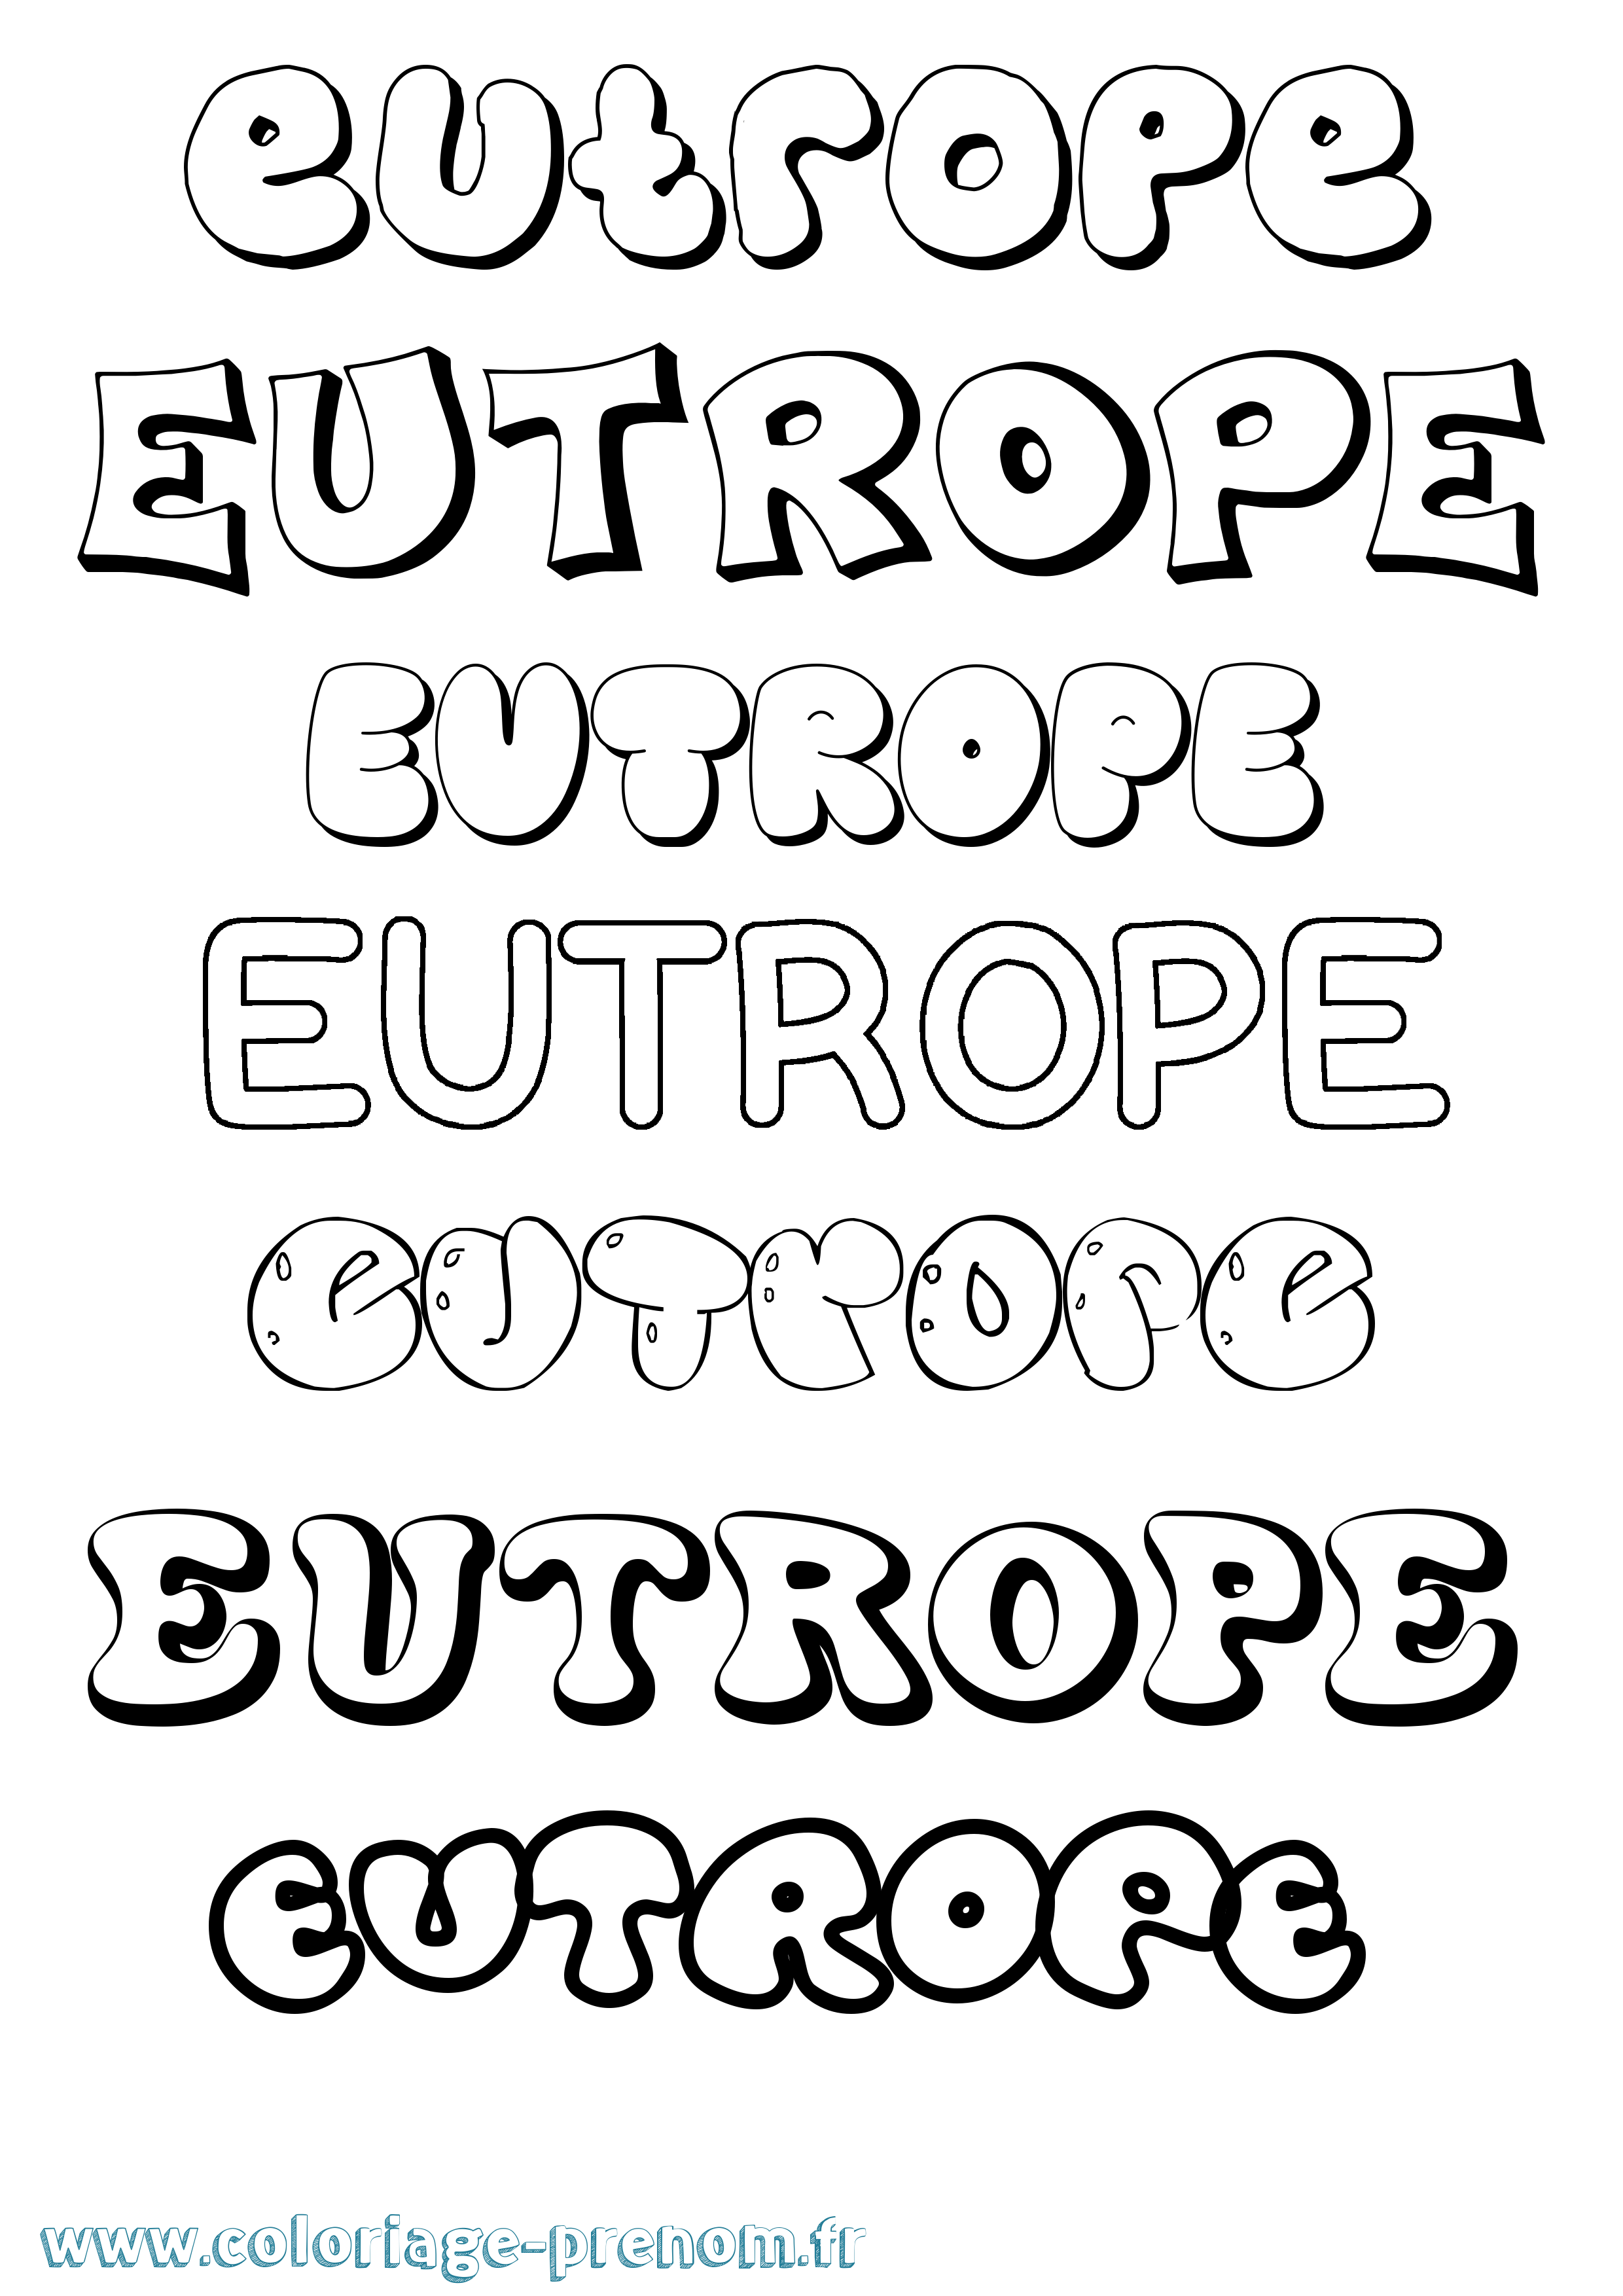 Coloriage prénom Eutrope Bubble